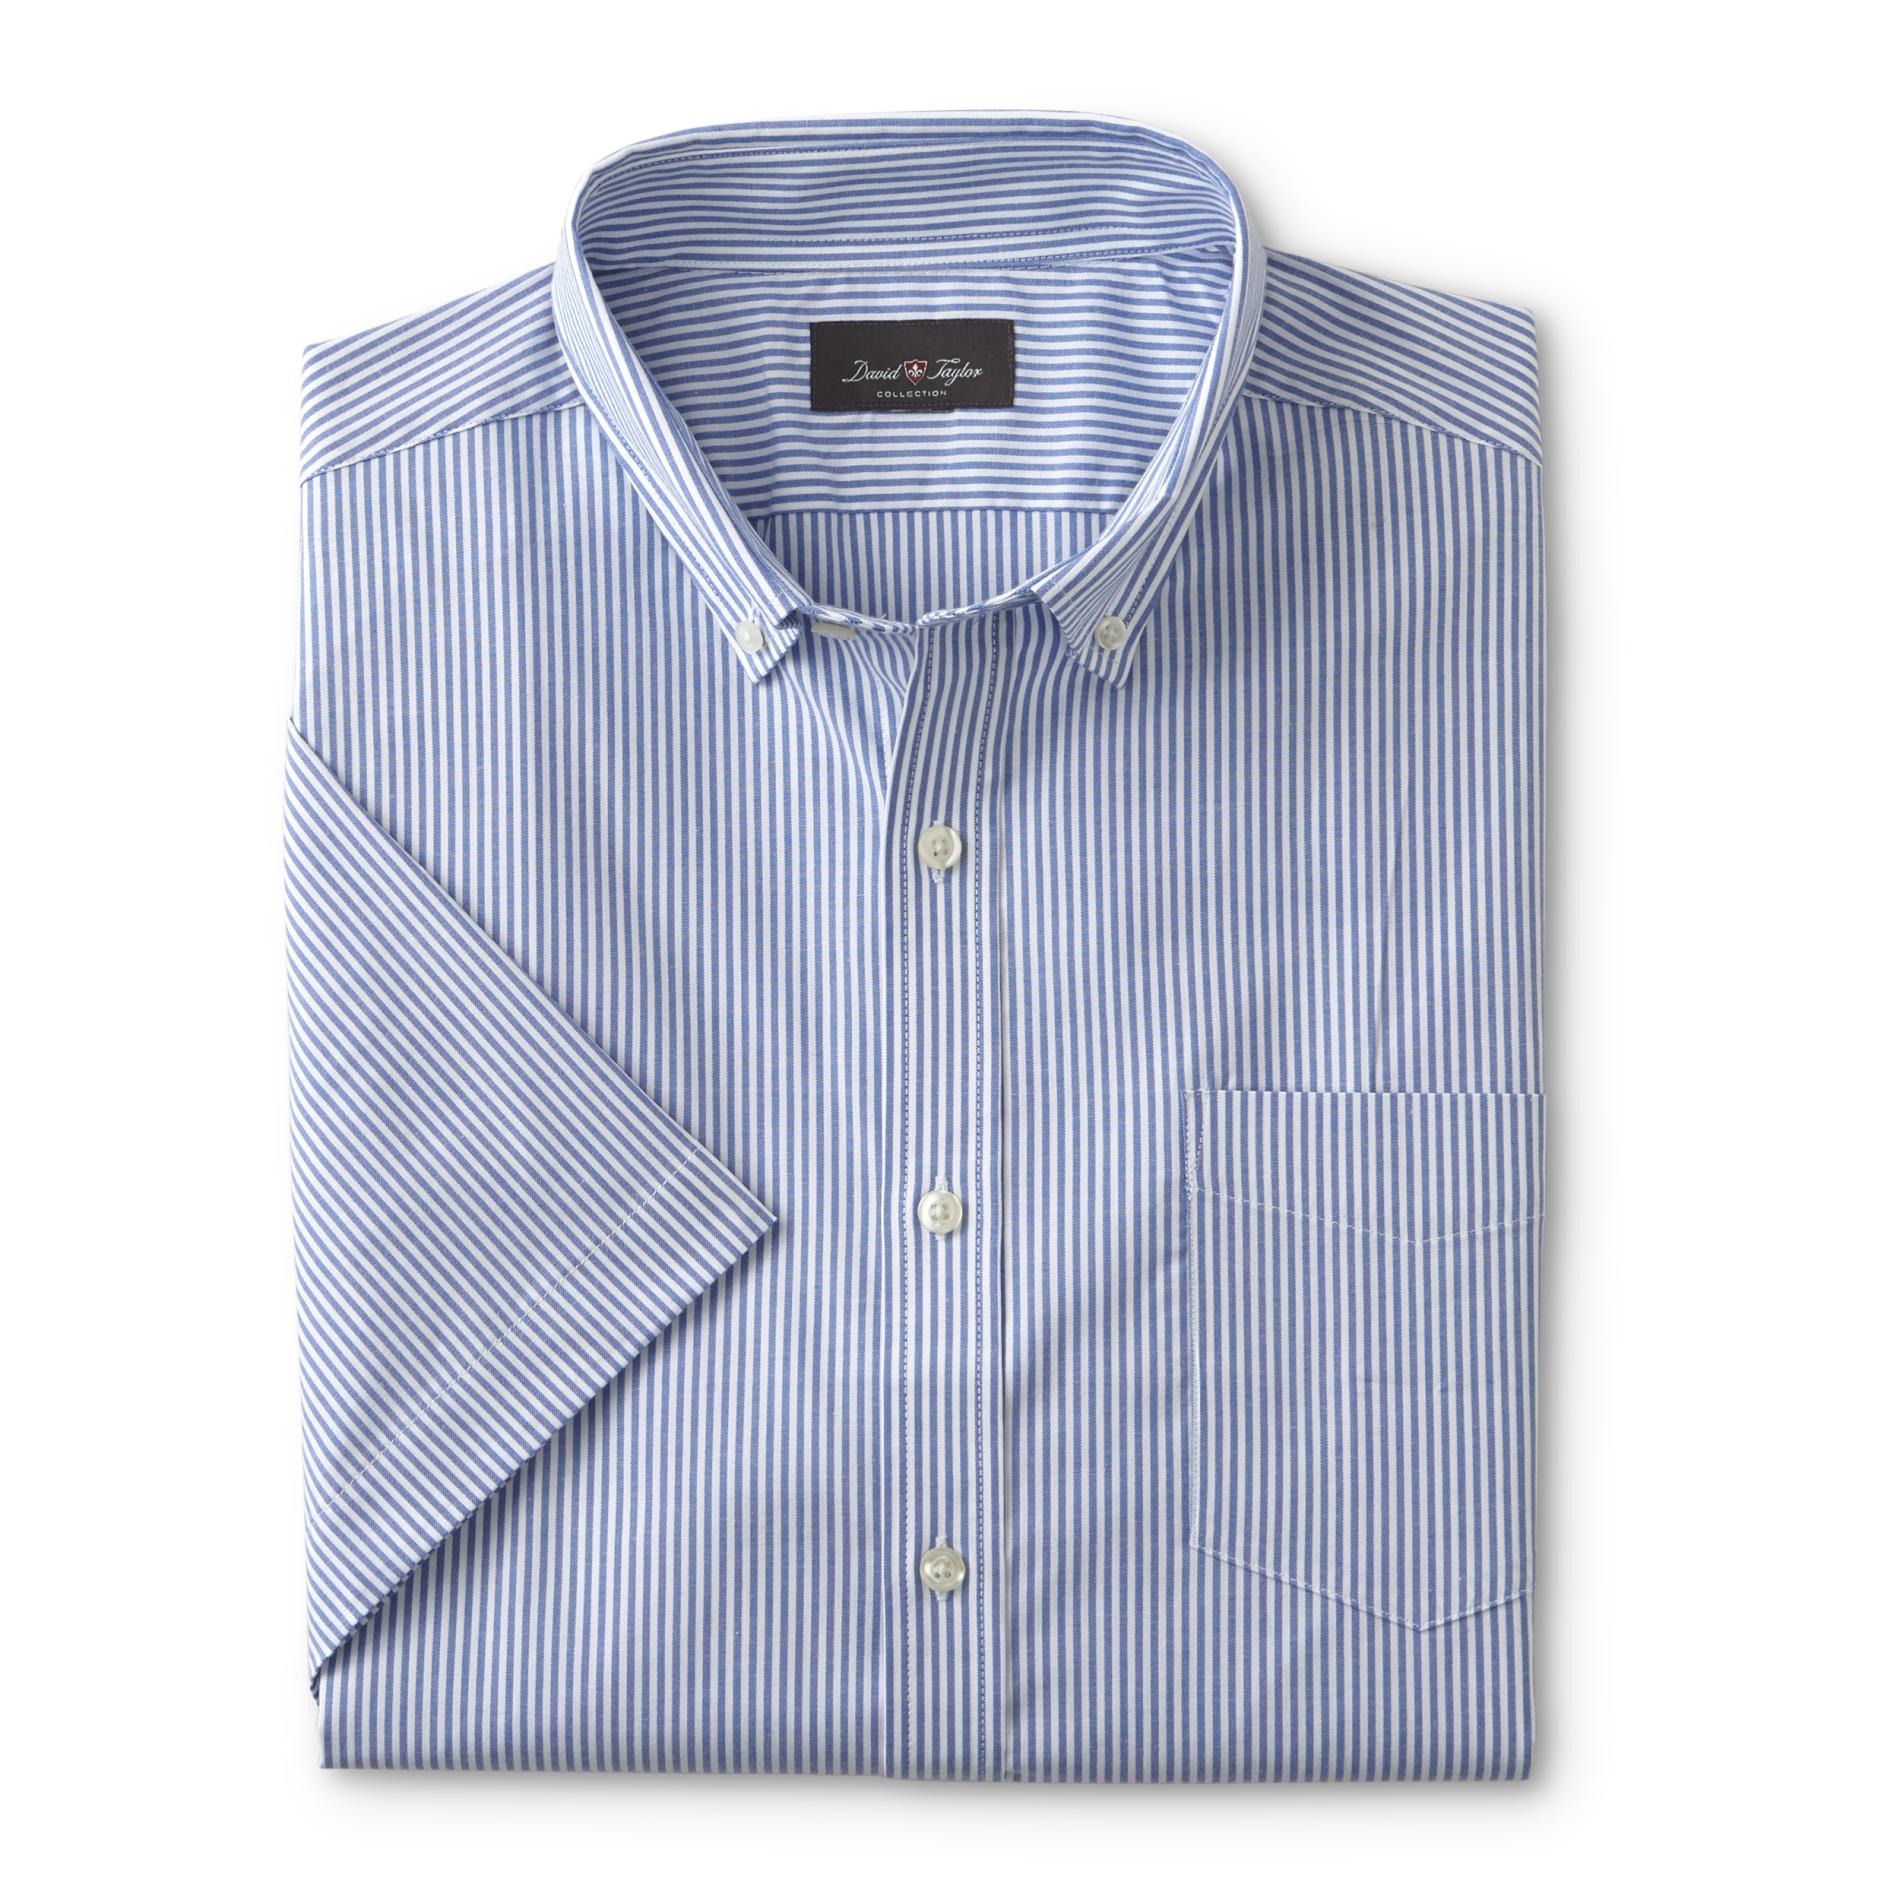 David Taylor Collection Men's Short-Sleeve Oxford Shirt - Striped